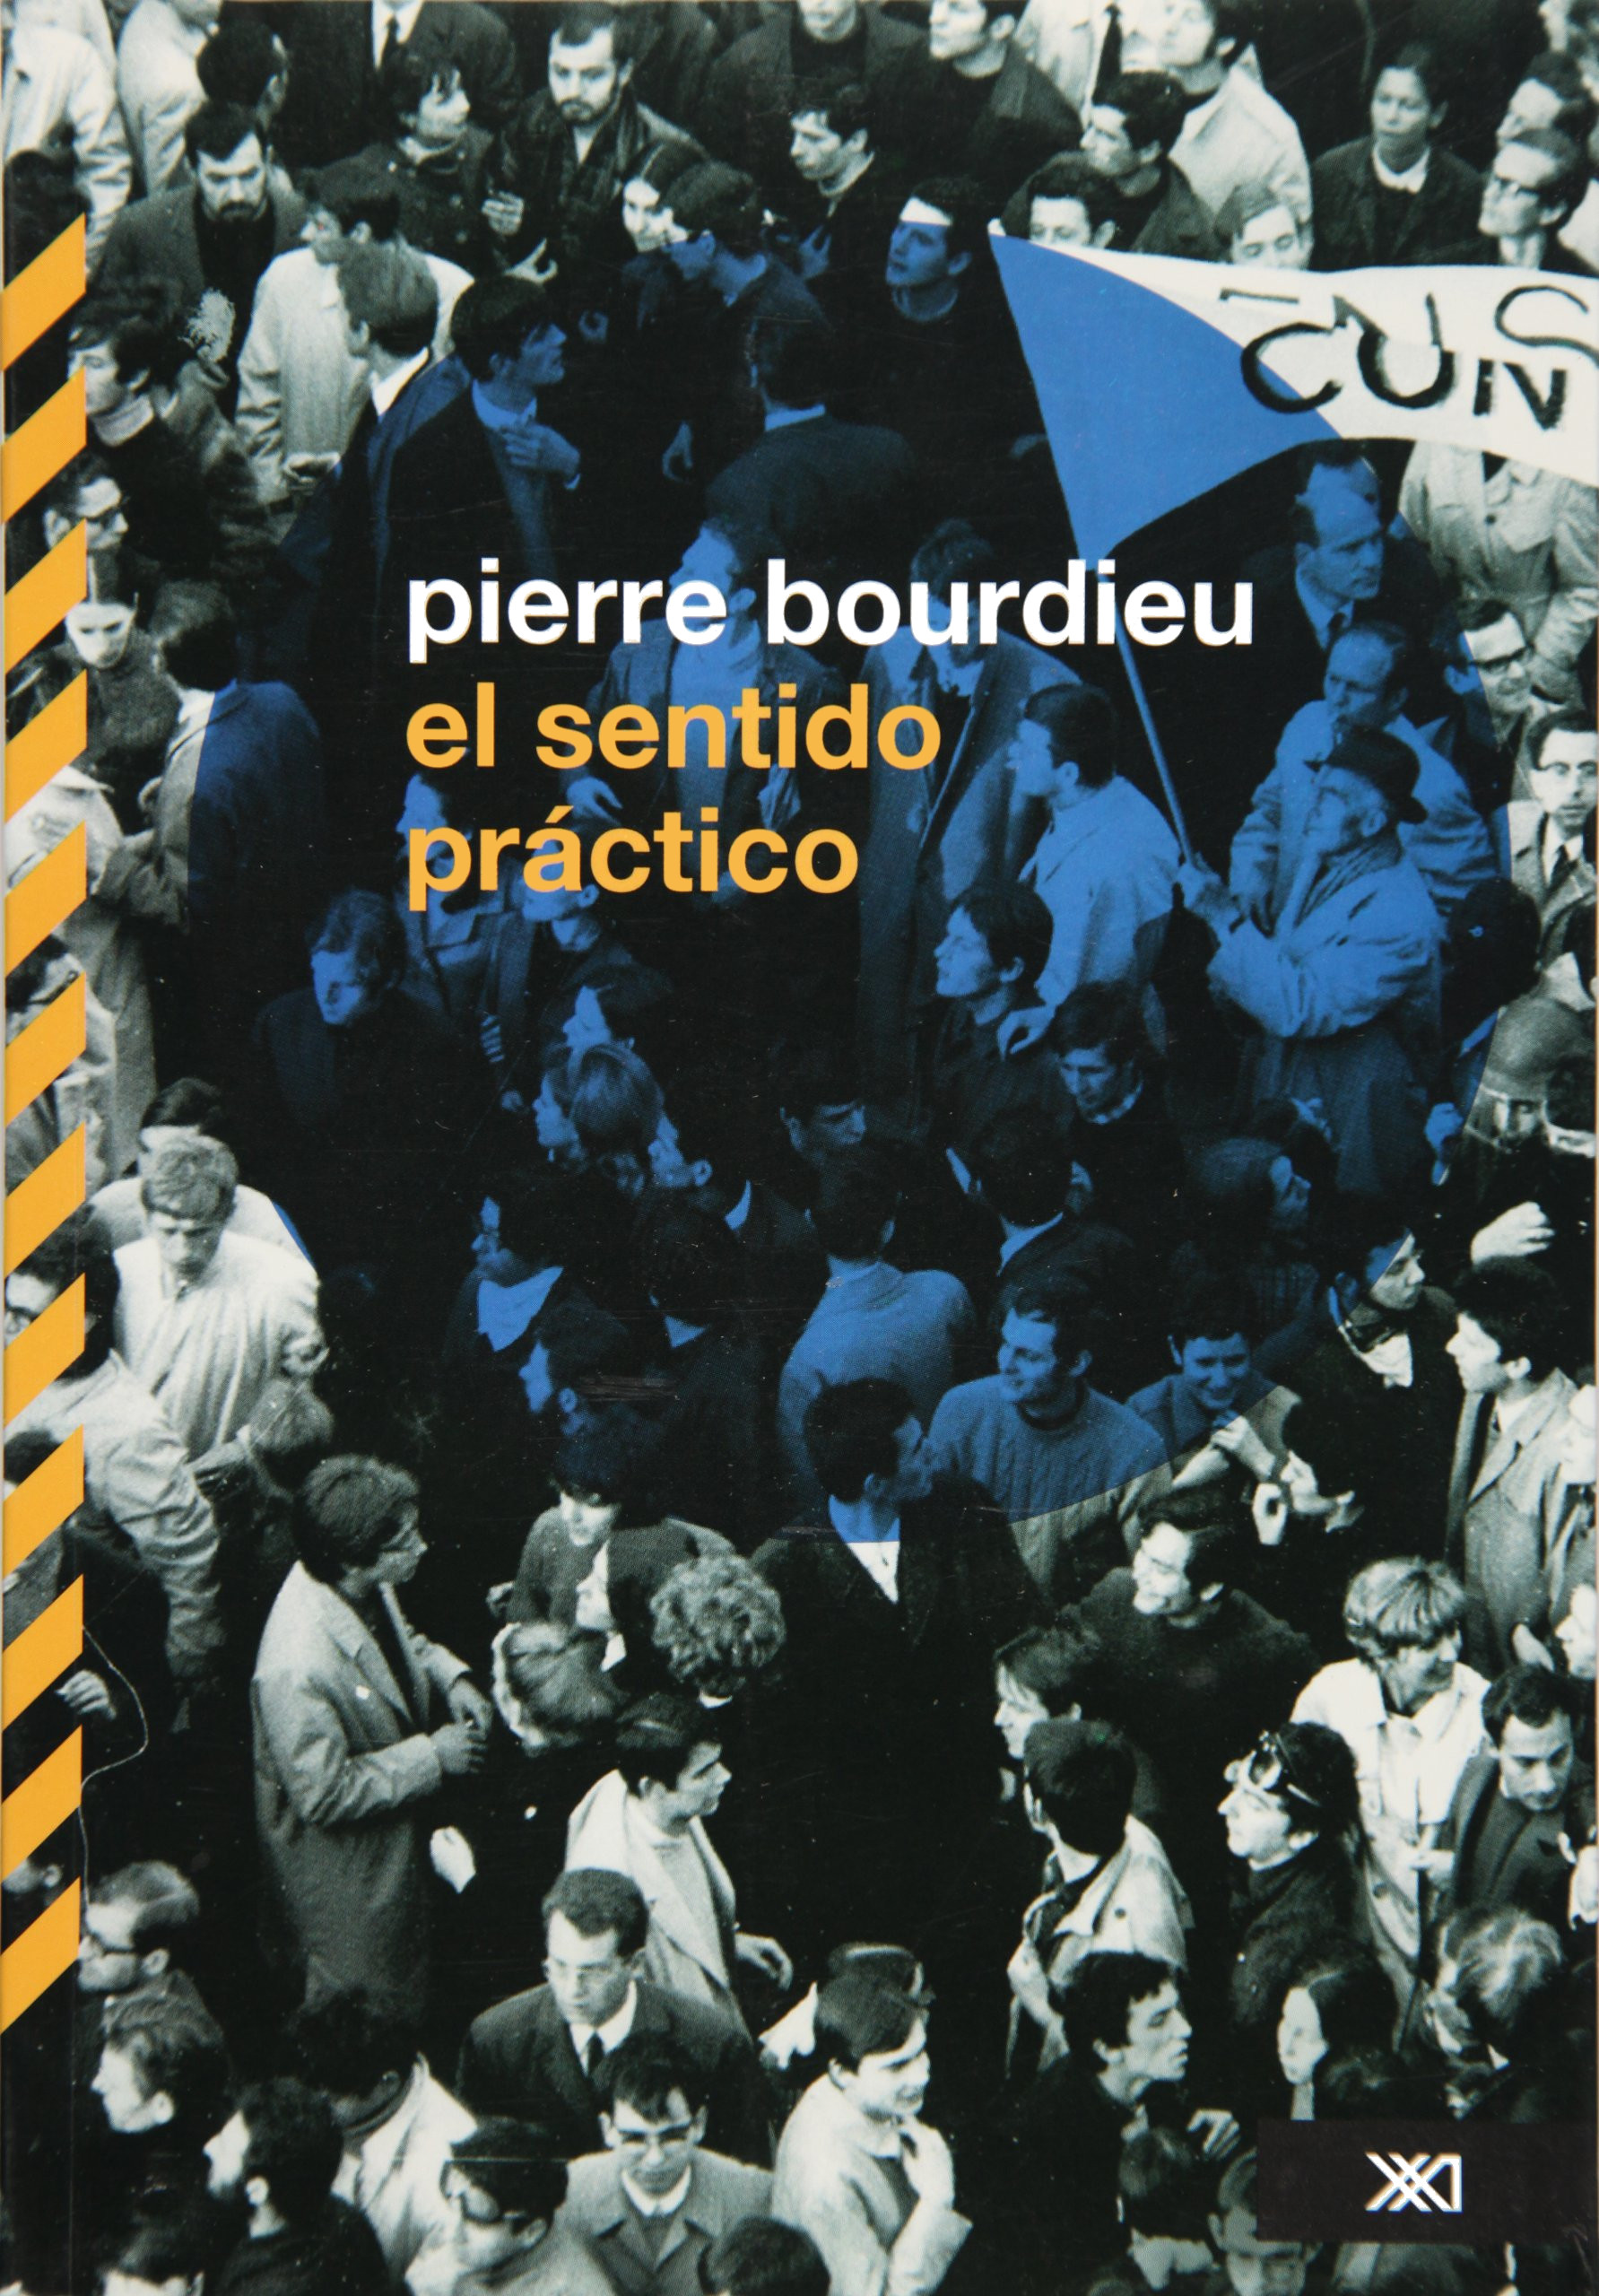 pierre bourdieu sentido practico libro pdf